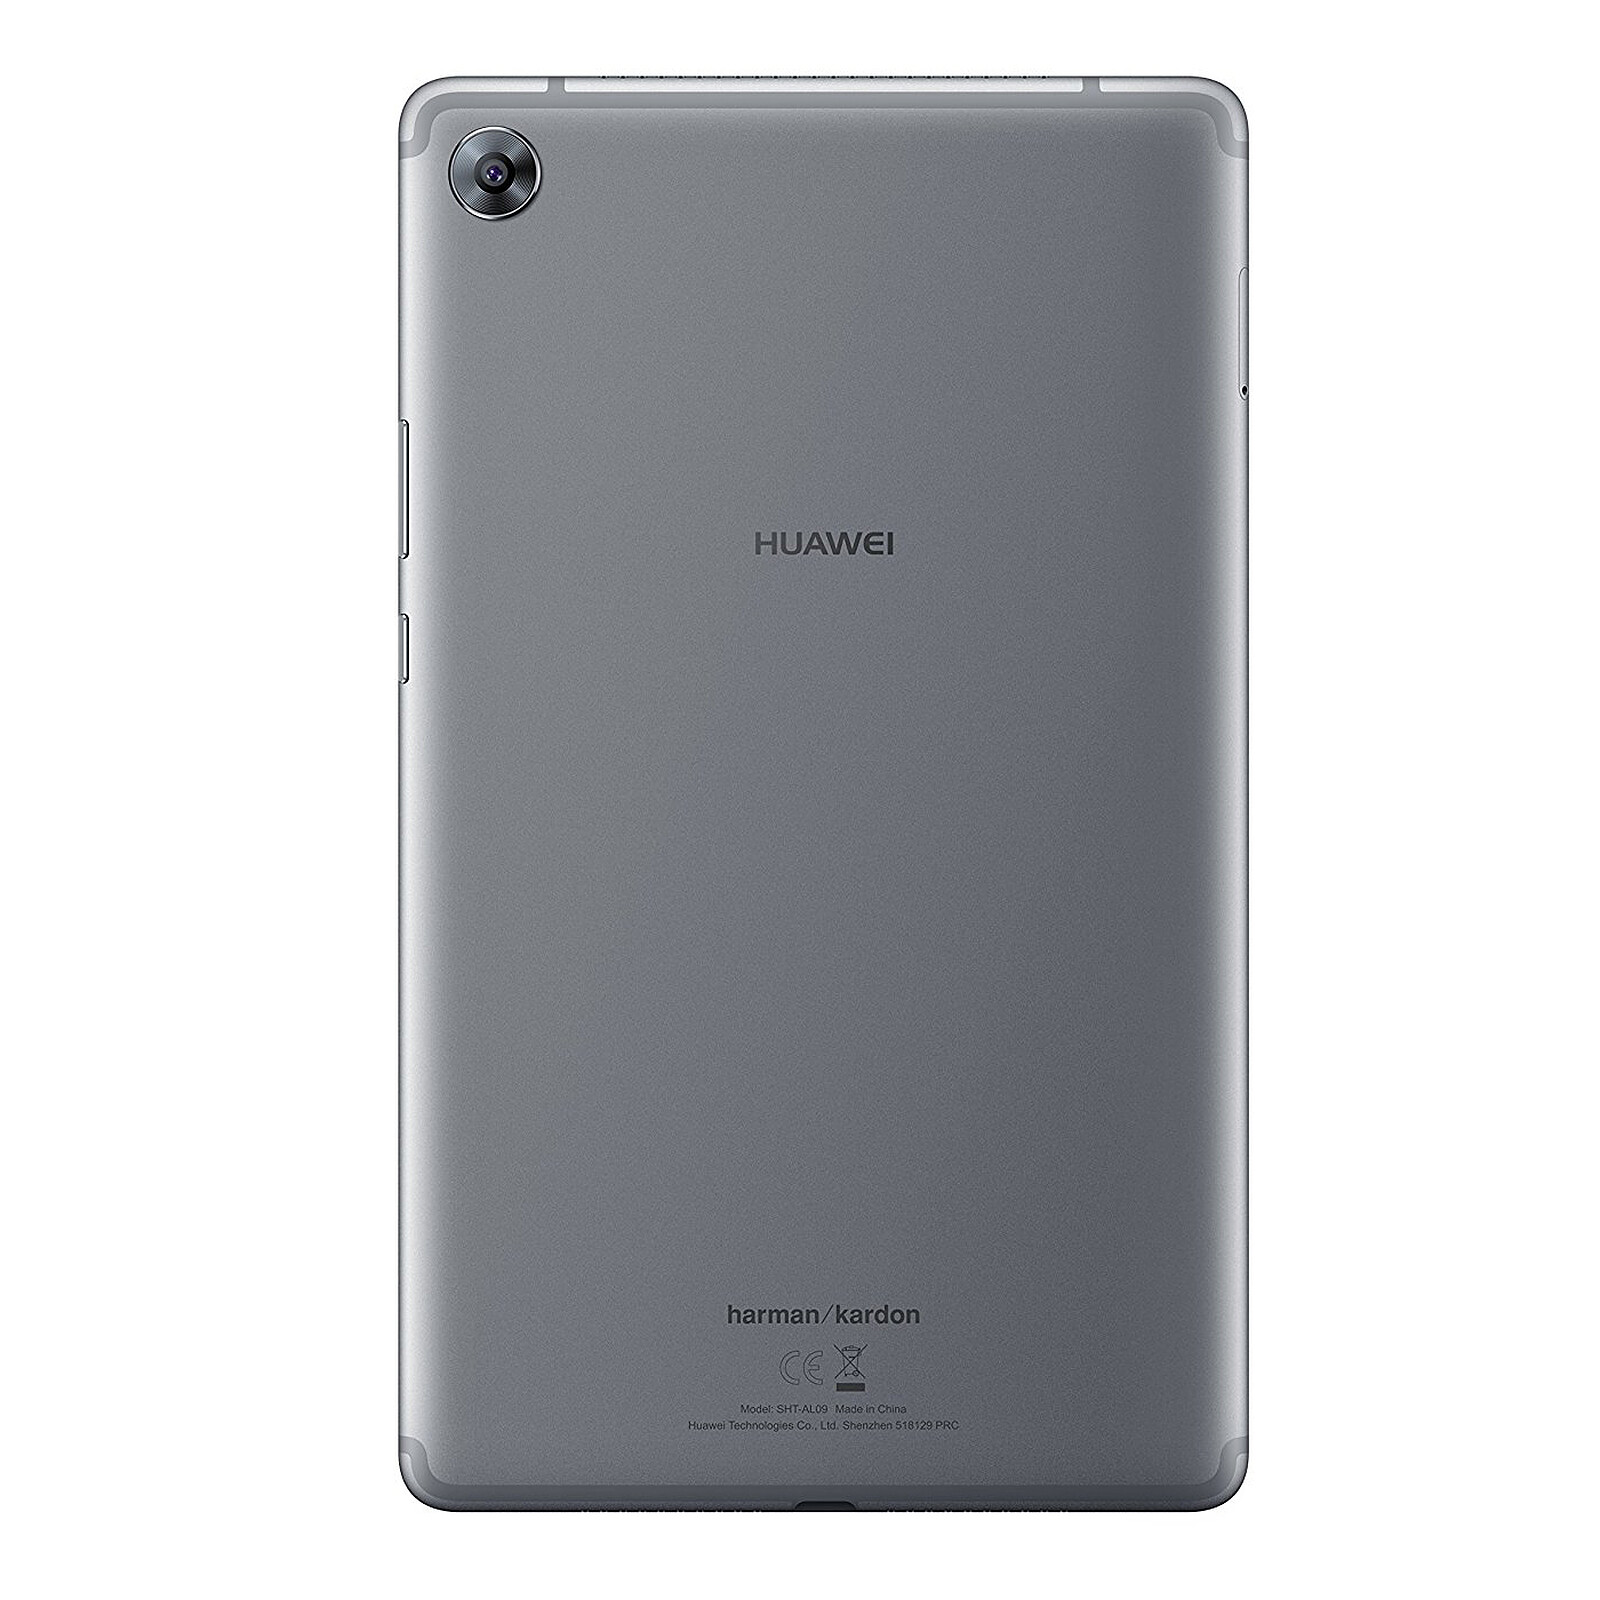 Huawei MediaPad M5 8.4" LTE Gris - Tablet Huawei en | ¡Musericordia!